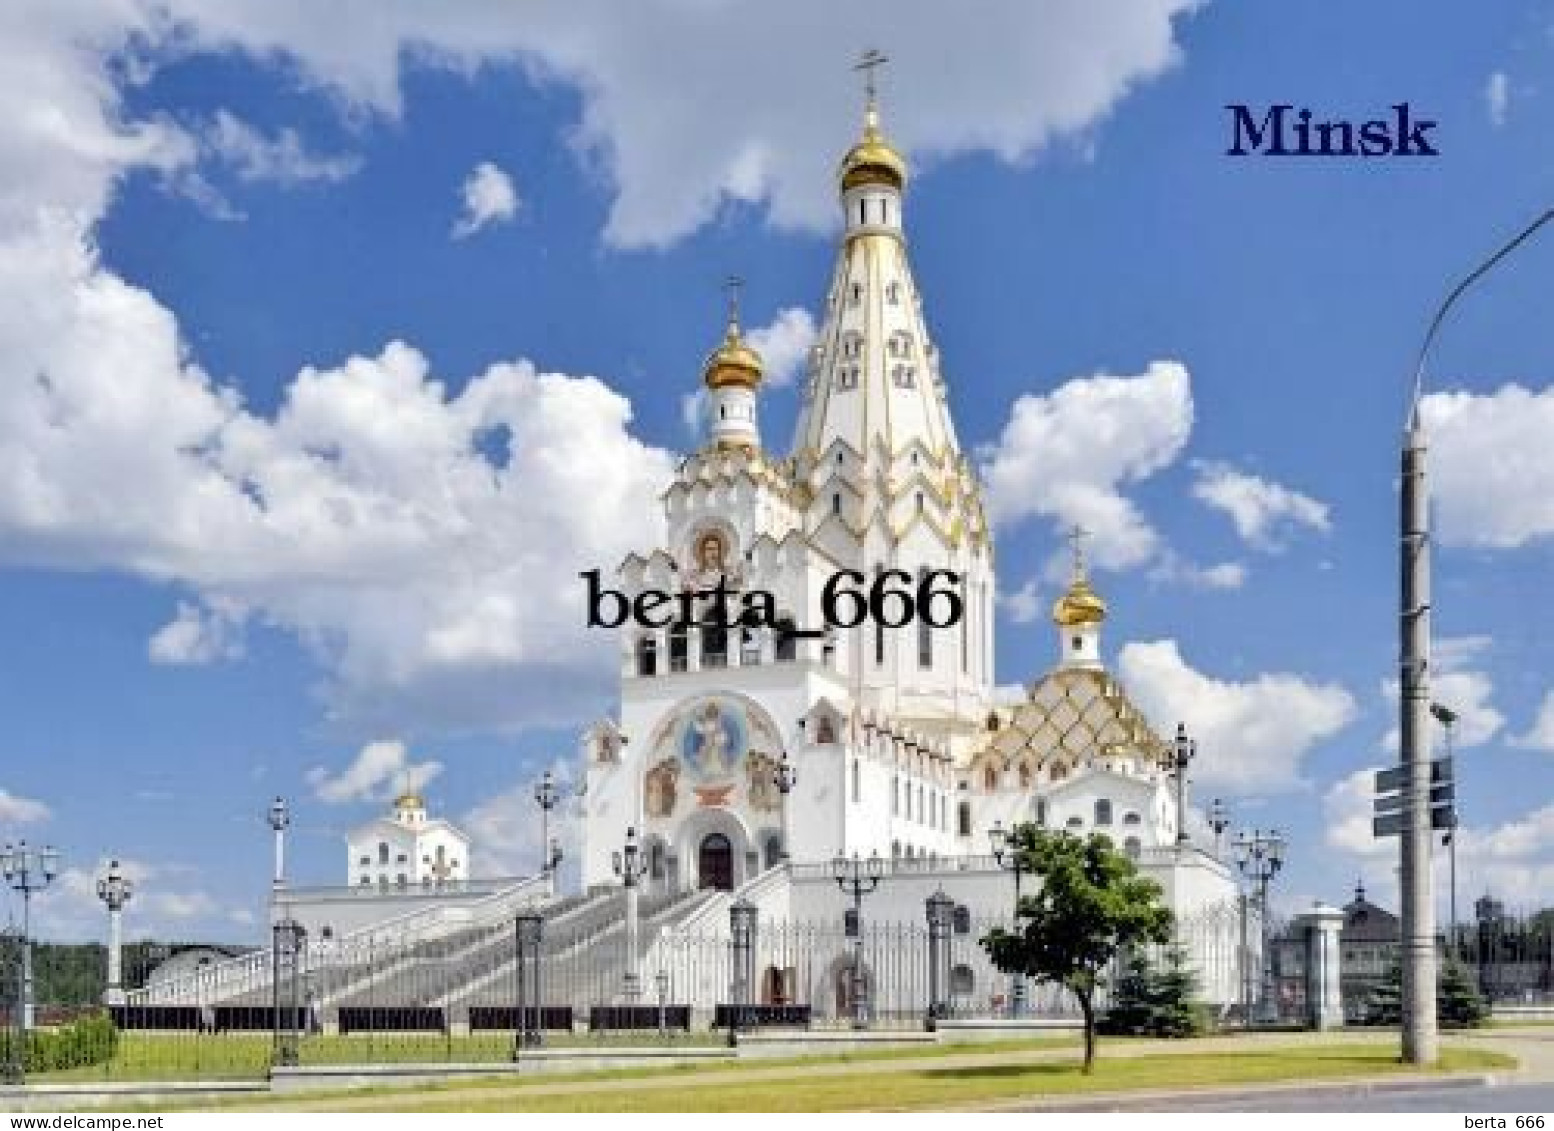 Belarus Minsk All Saints Church New Postcard - Weißrussland